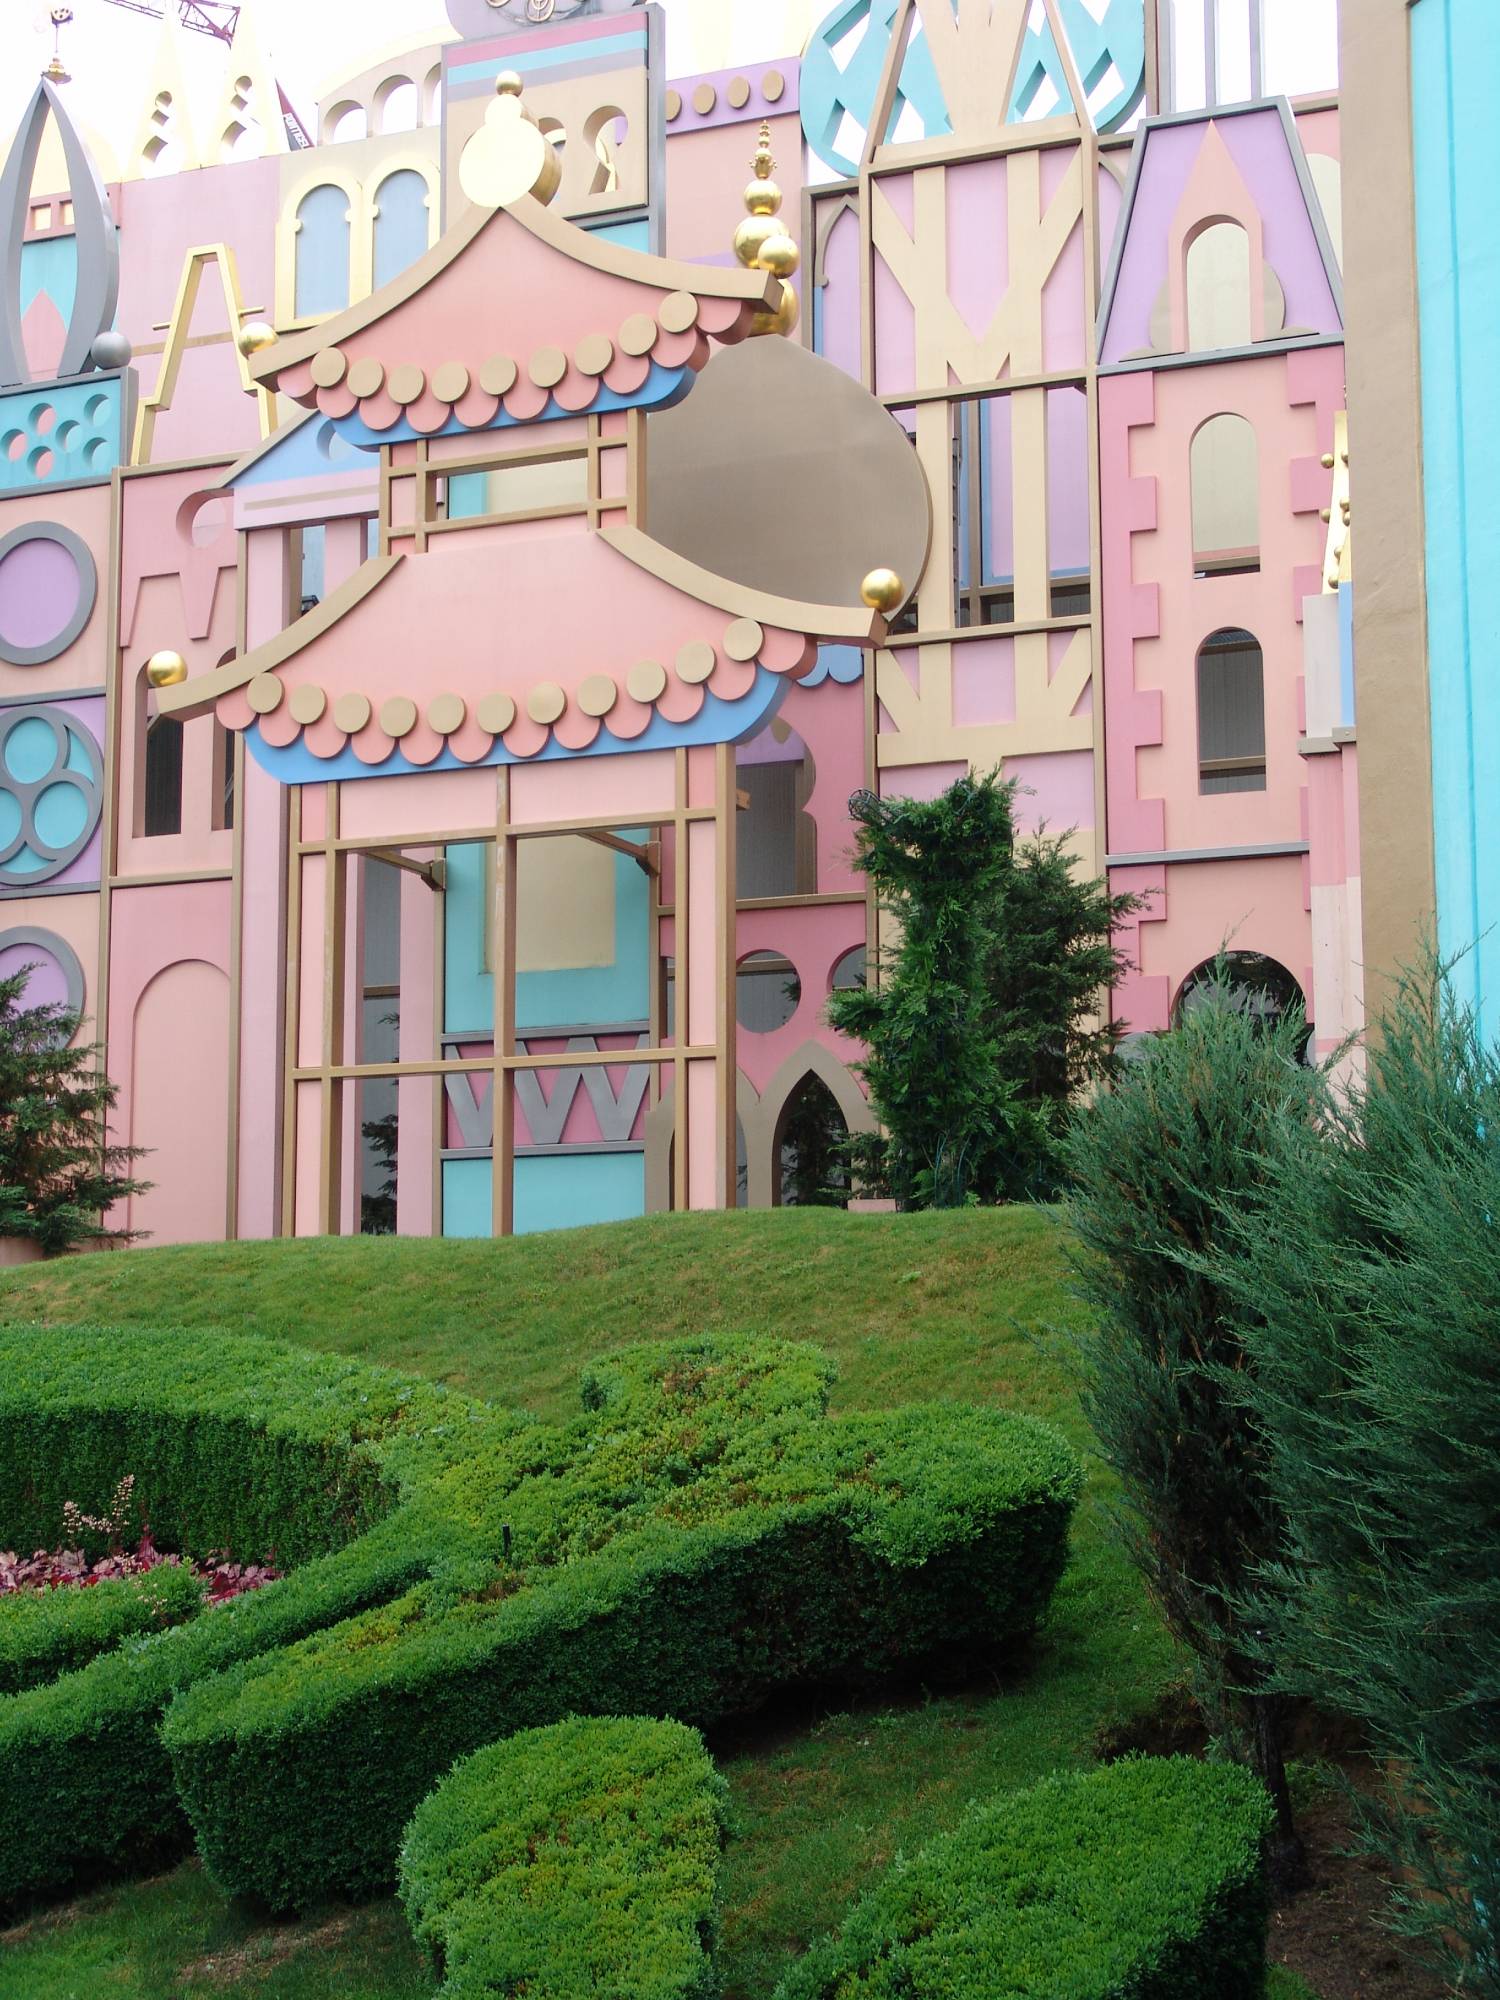 Disneyland Paris - It's A Small World